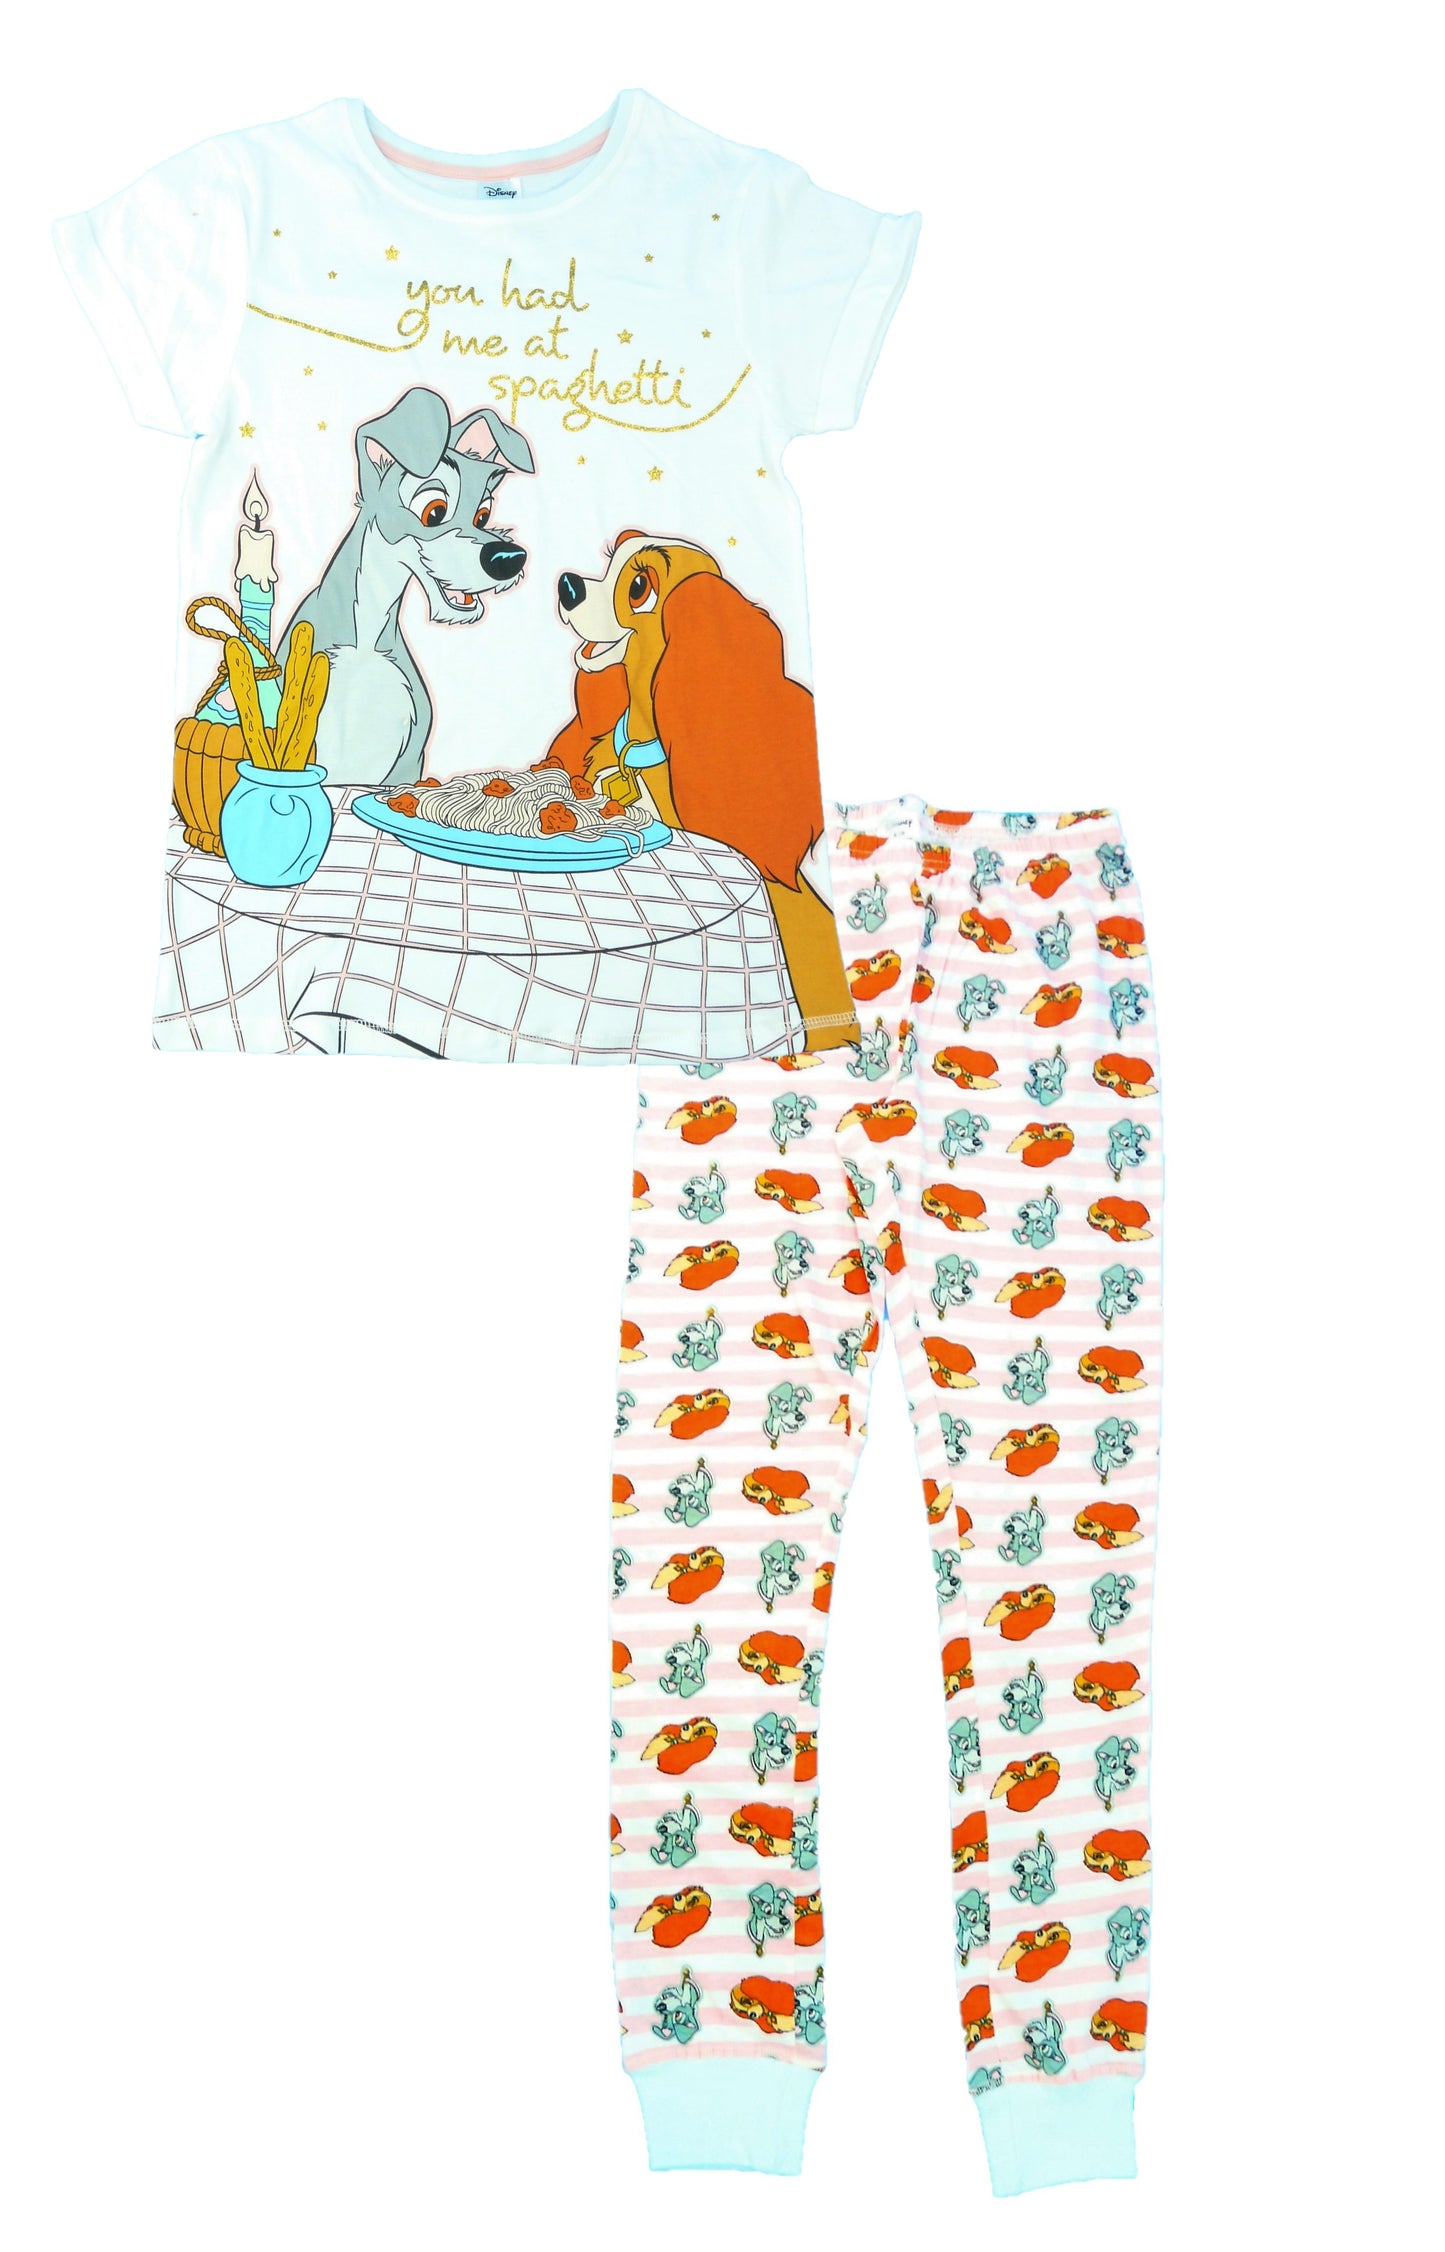 Lady and the Tramp “Spaghetti” Ladies Pyjama Set Size 8-10- Great Gift Idea